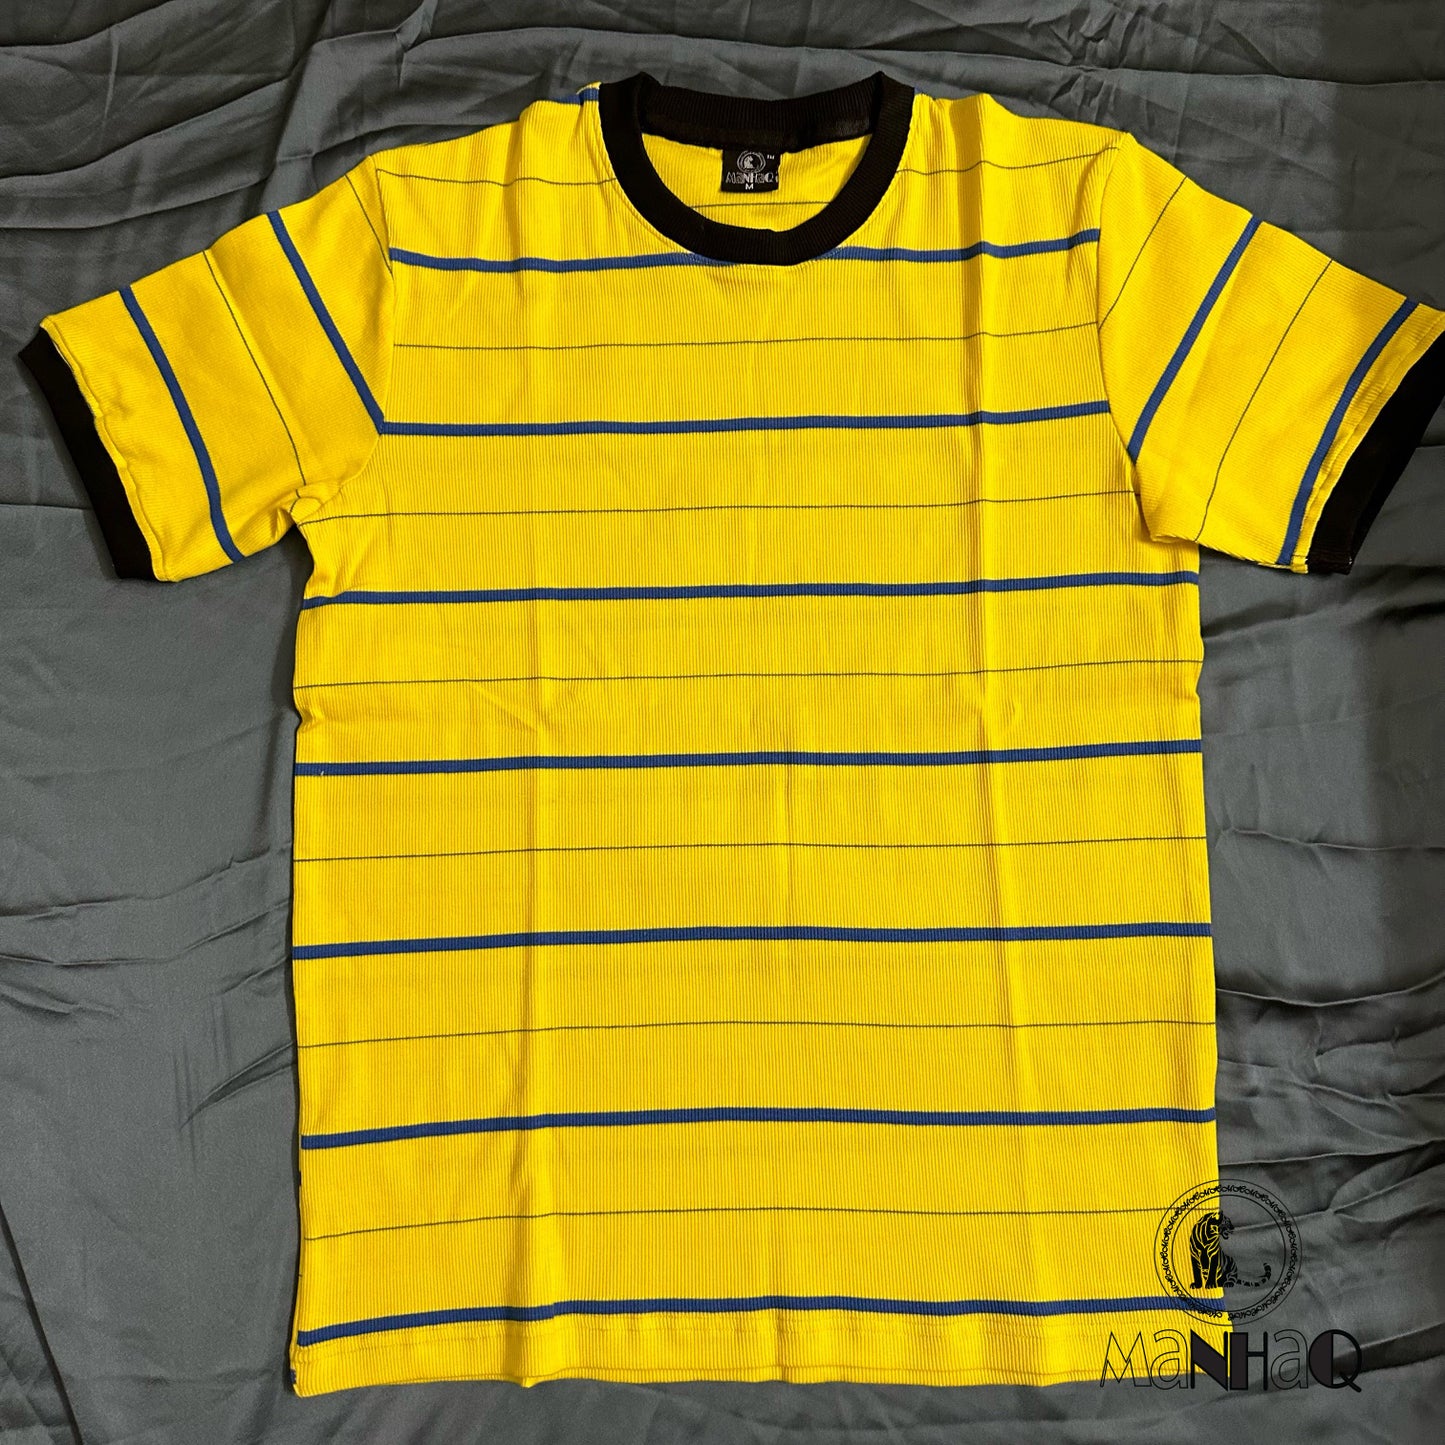 Short sleeve yellow unisex Tshirt